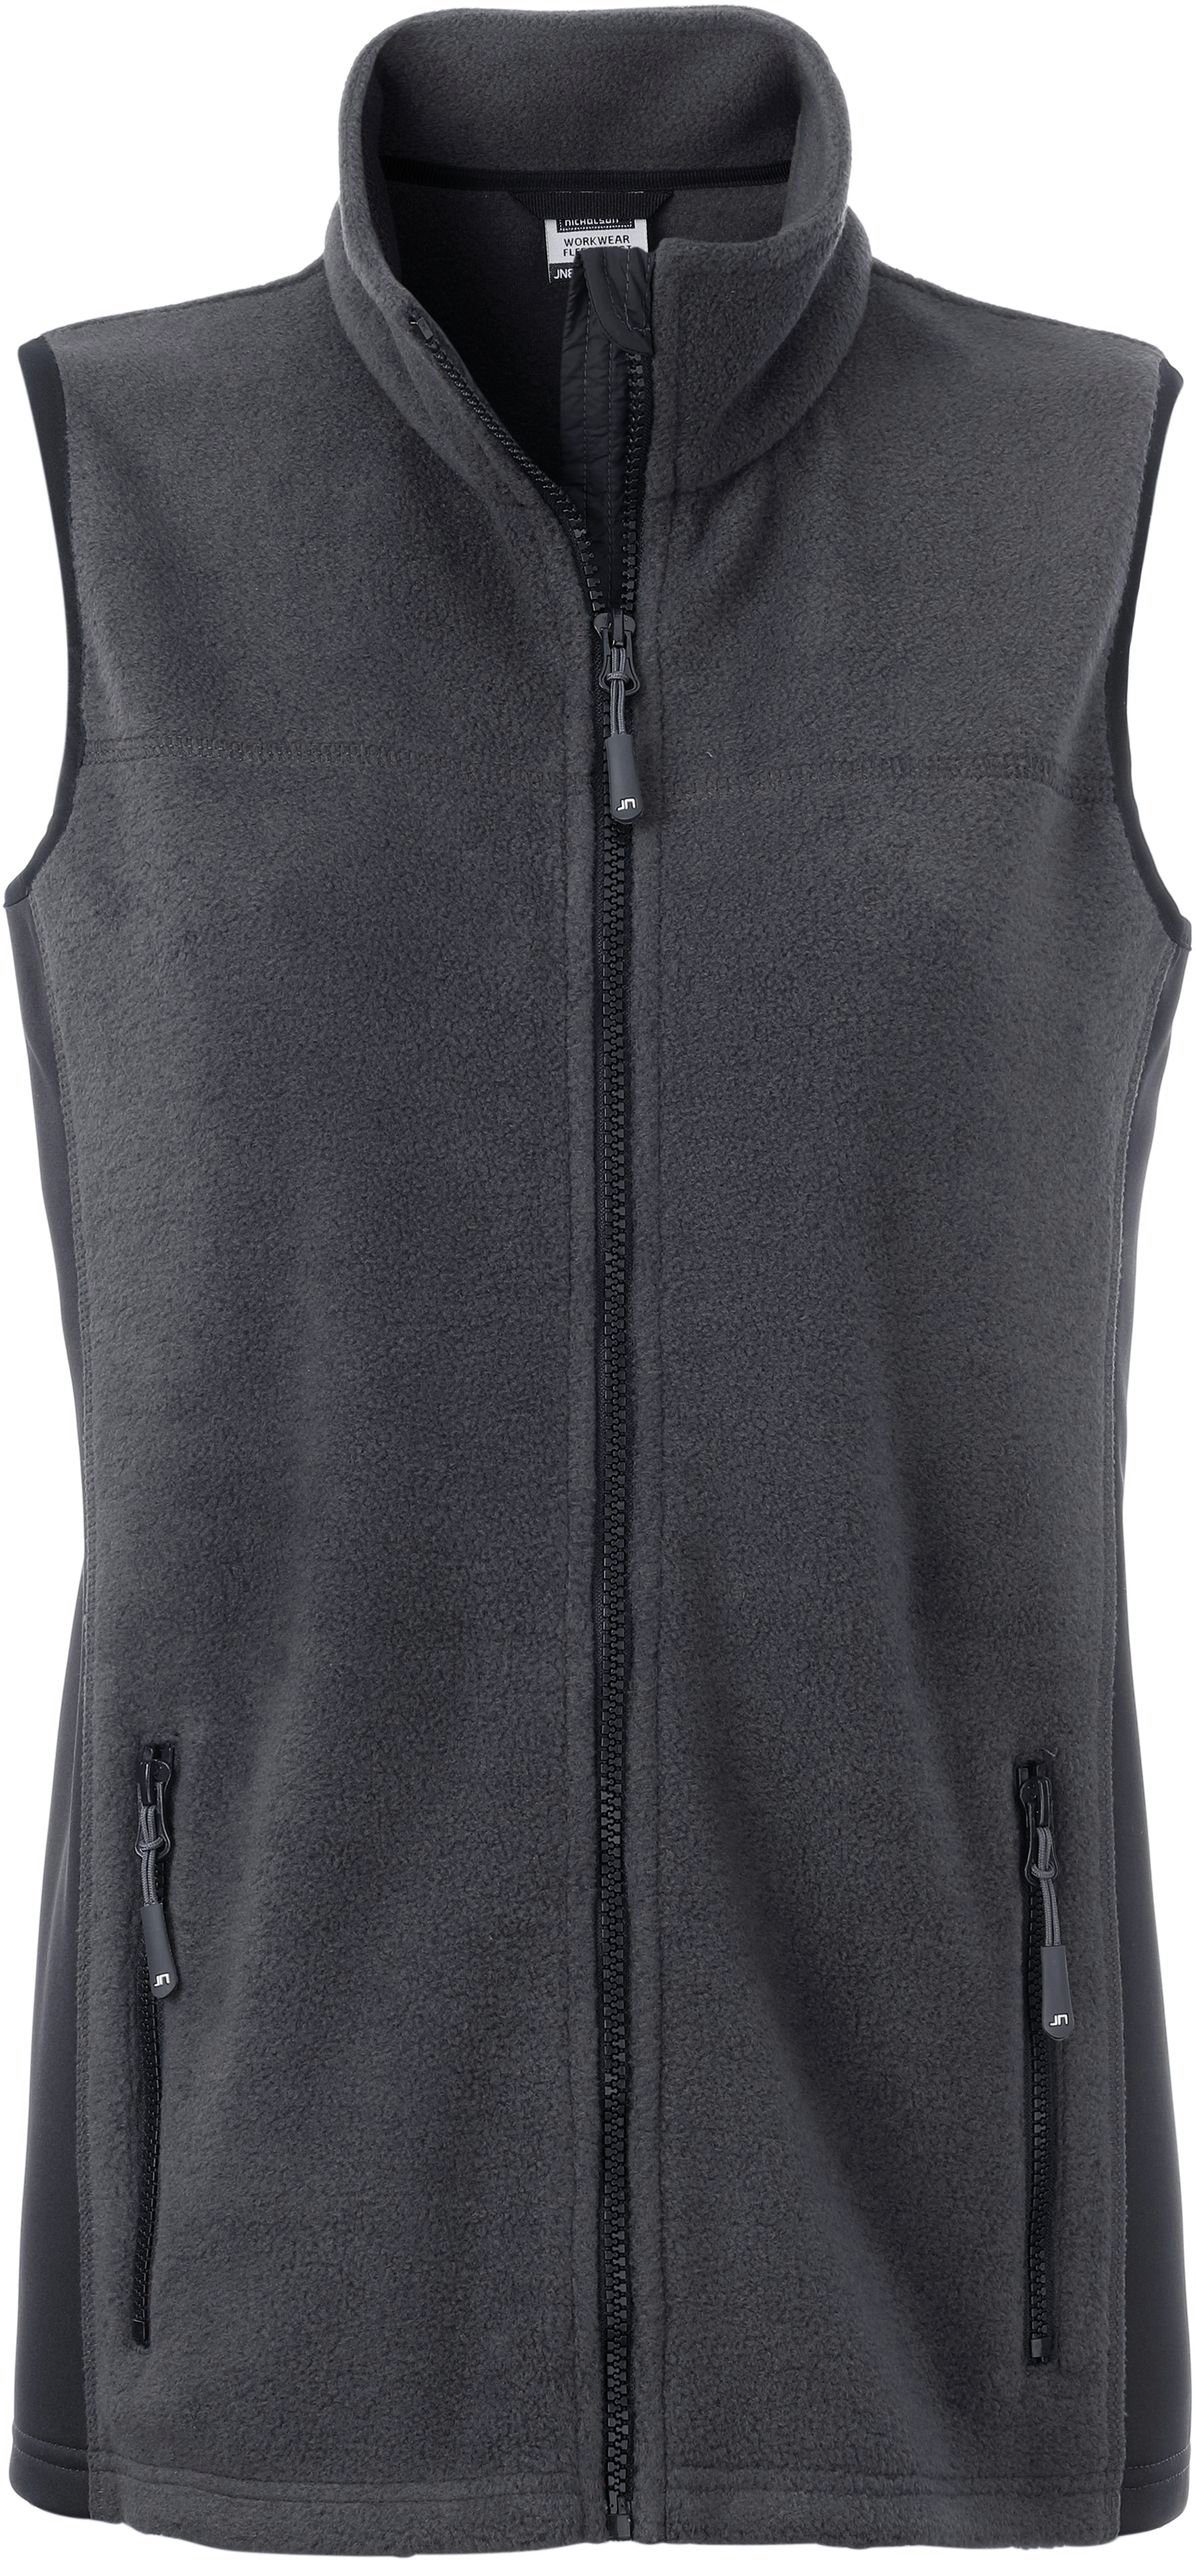 James & Nicholson Fleeceweste Workwear Fleece Gilet Weste FaS50855 carbon/black